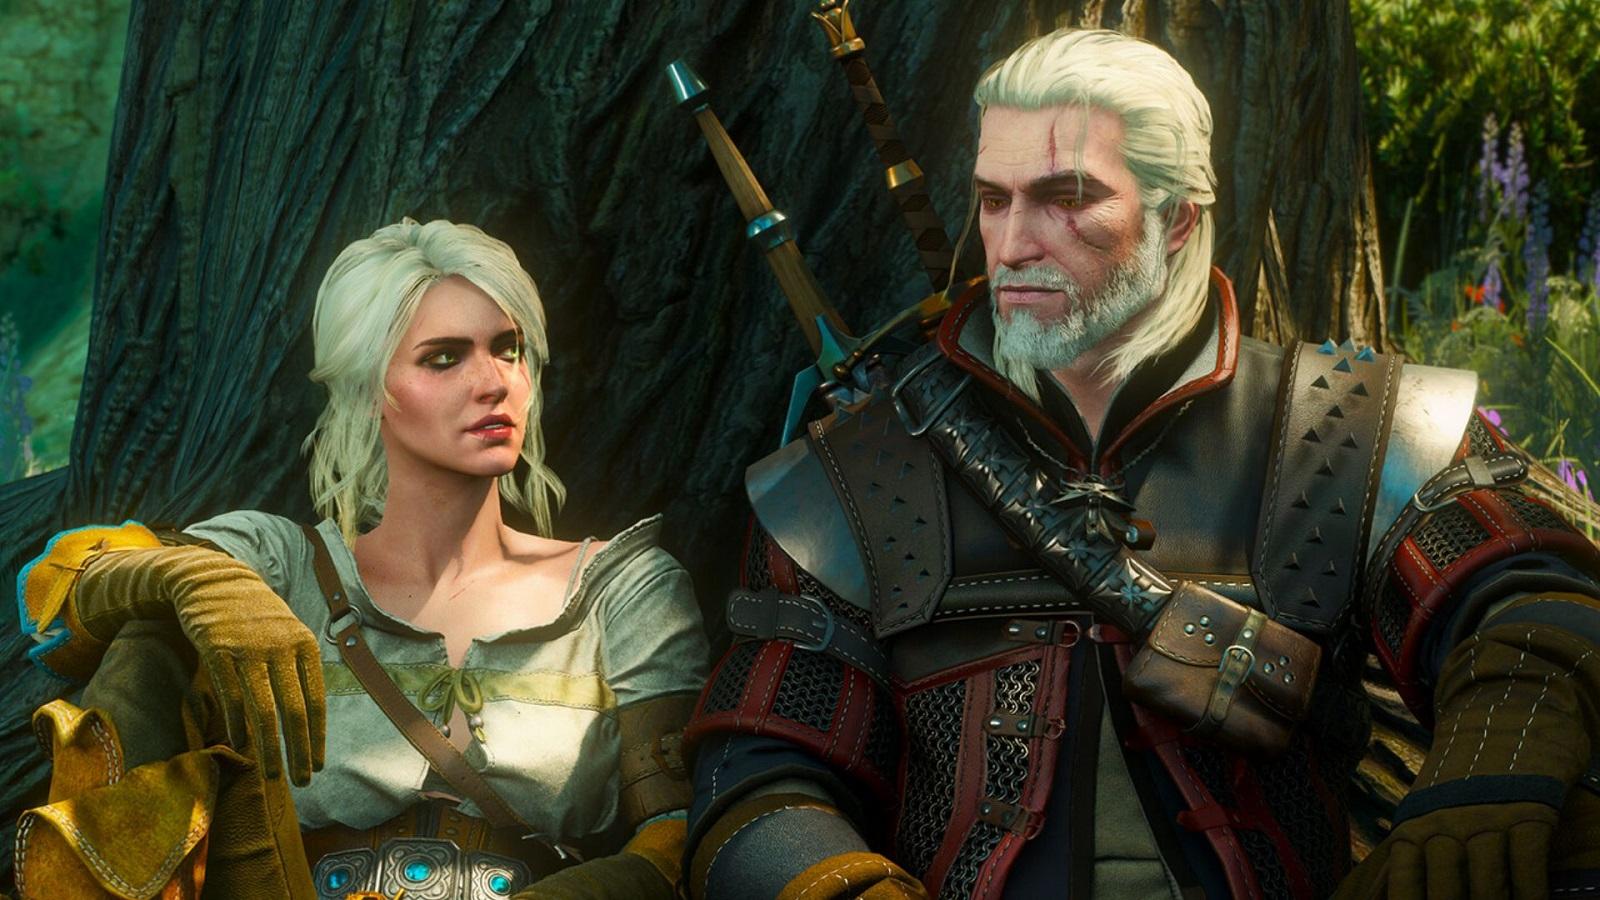 Geralt and Ciri sitting together